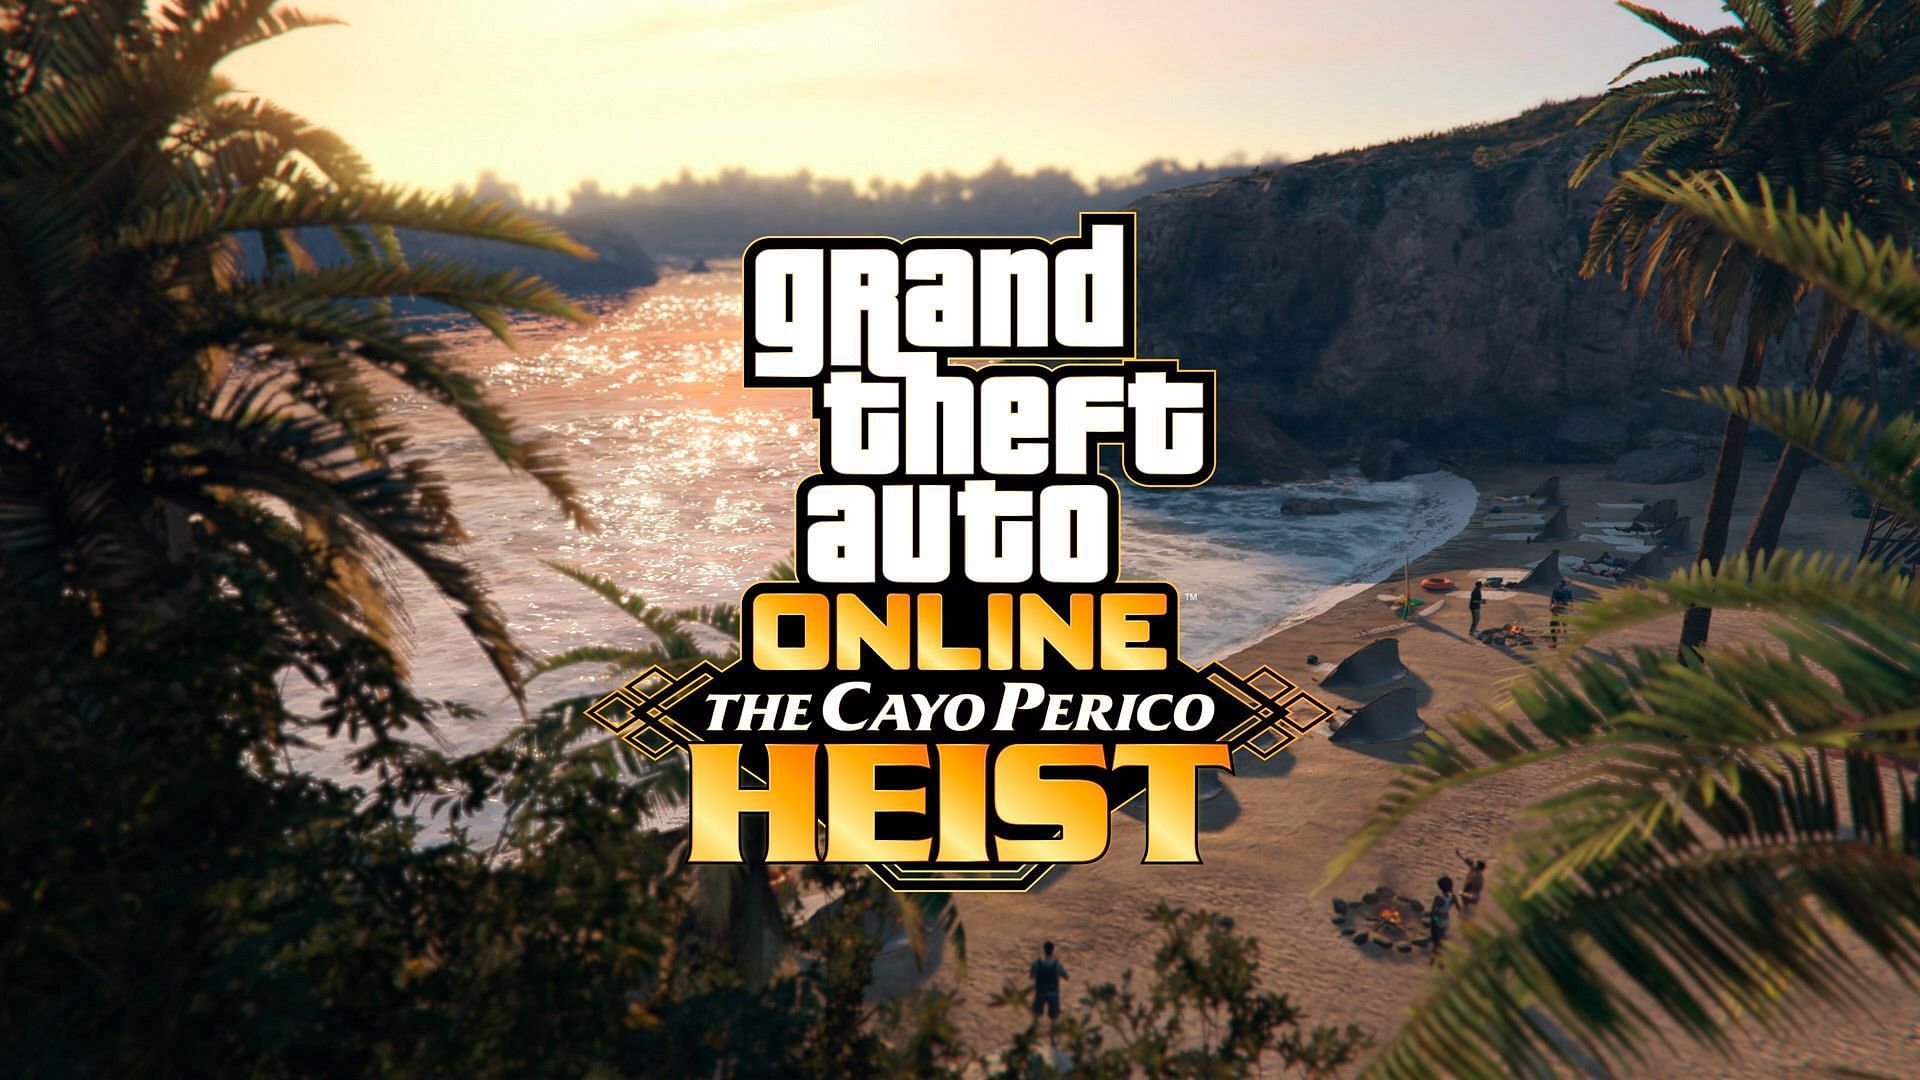 This heist takes place on the Cayo Perico island (Image via Rockstar Games)